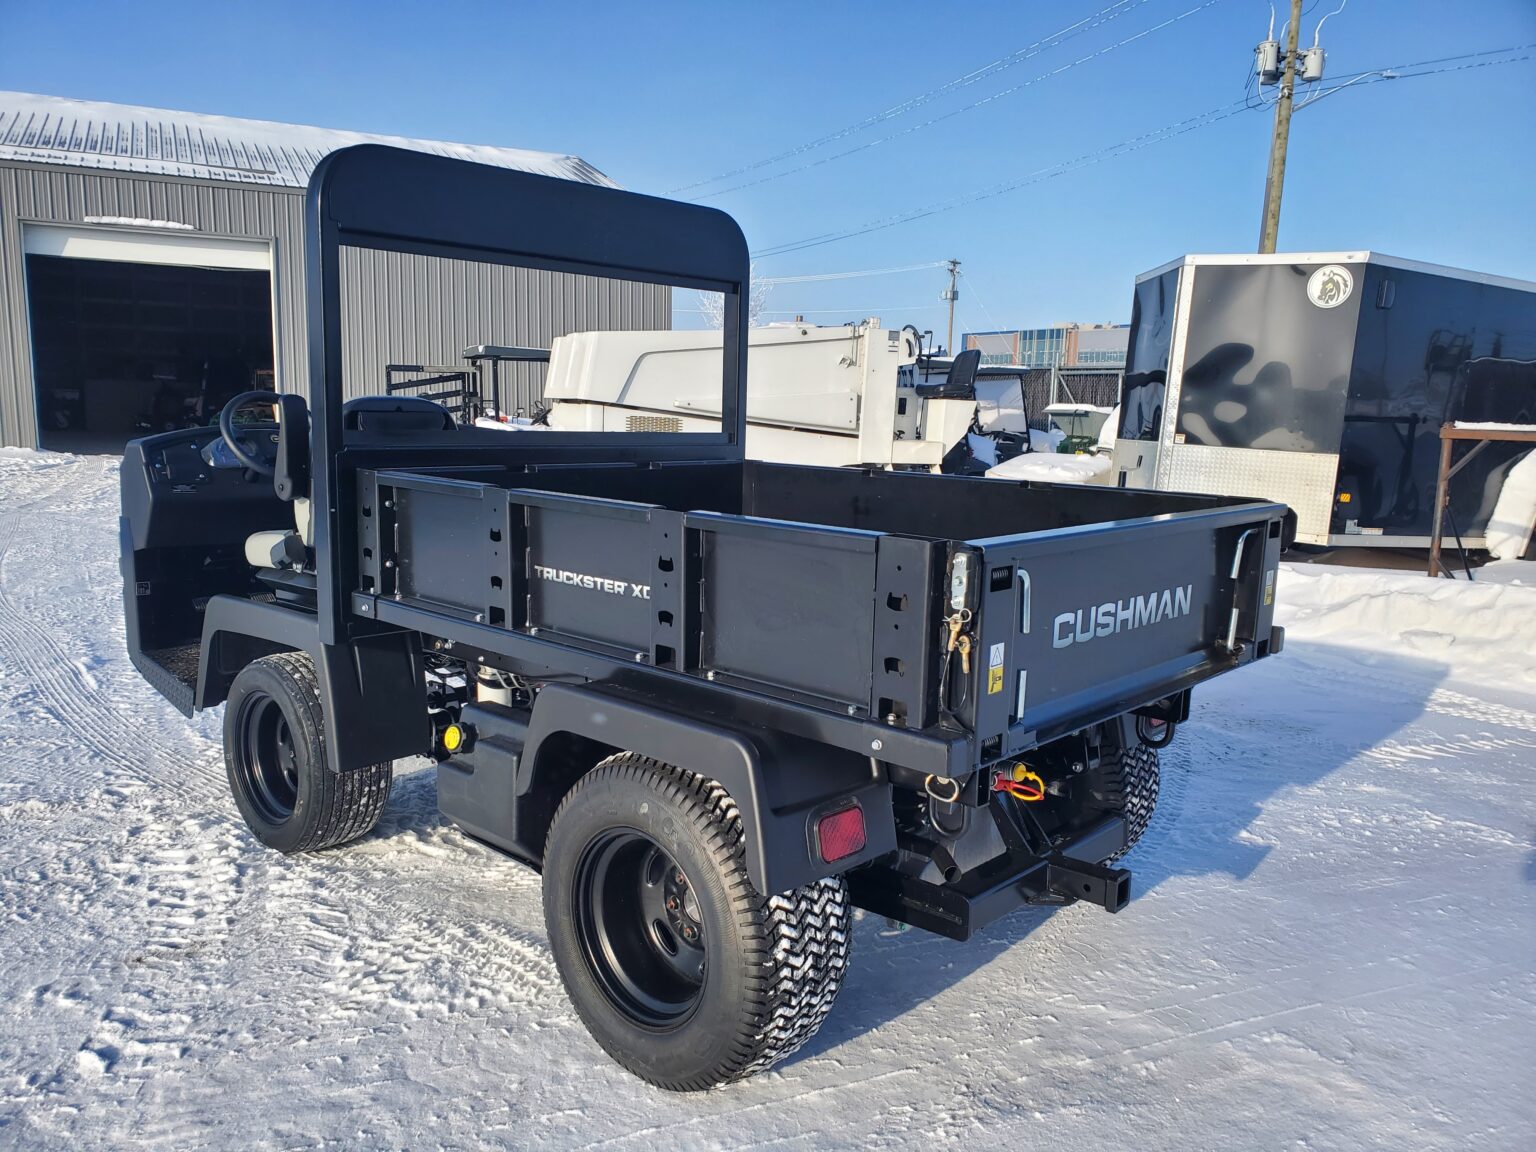 Brand New 2022 Cushman Truckster XD HeavyDuty Utility Vehicle